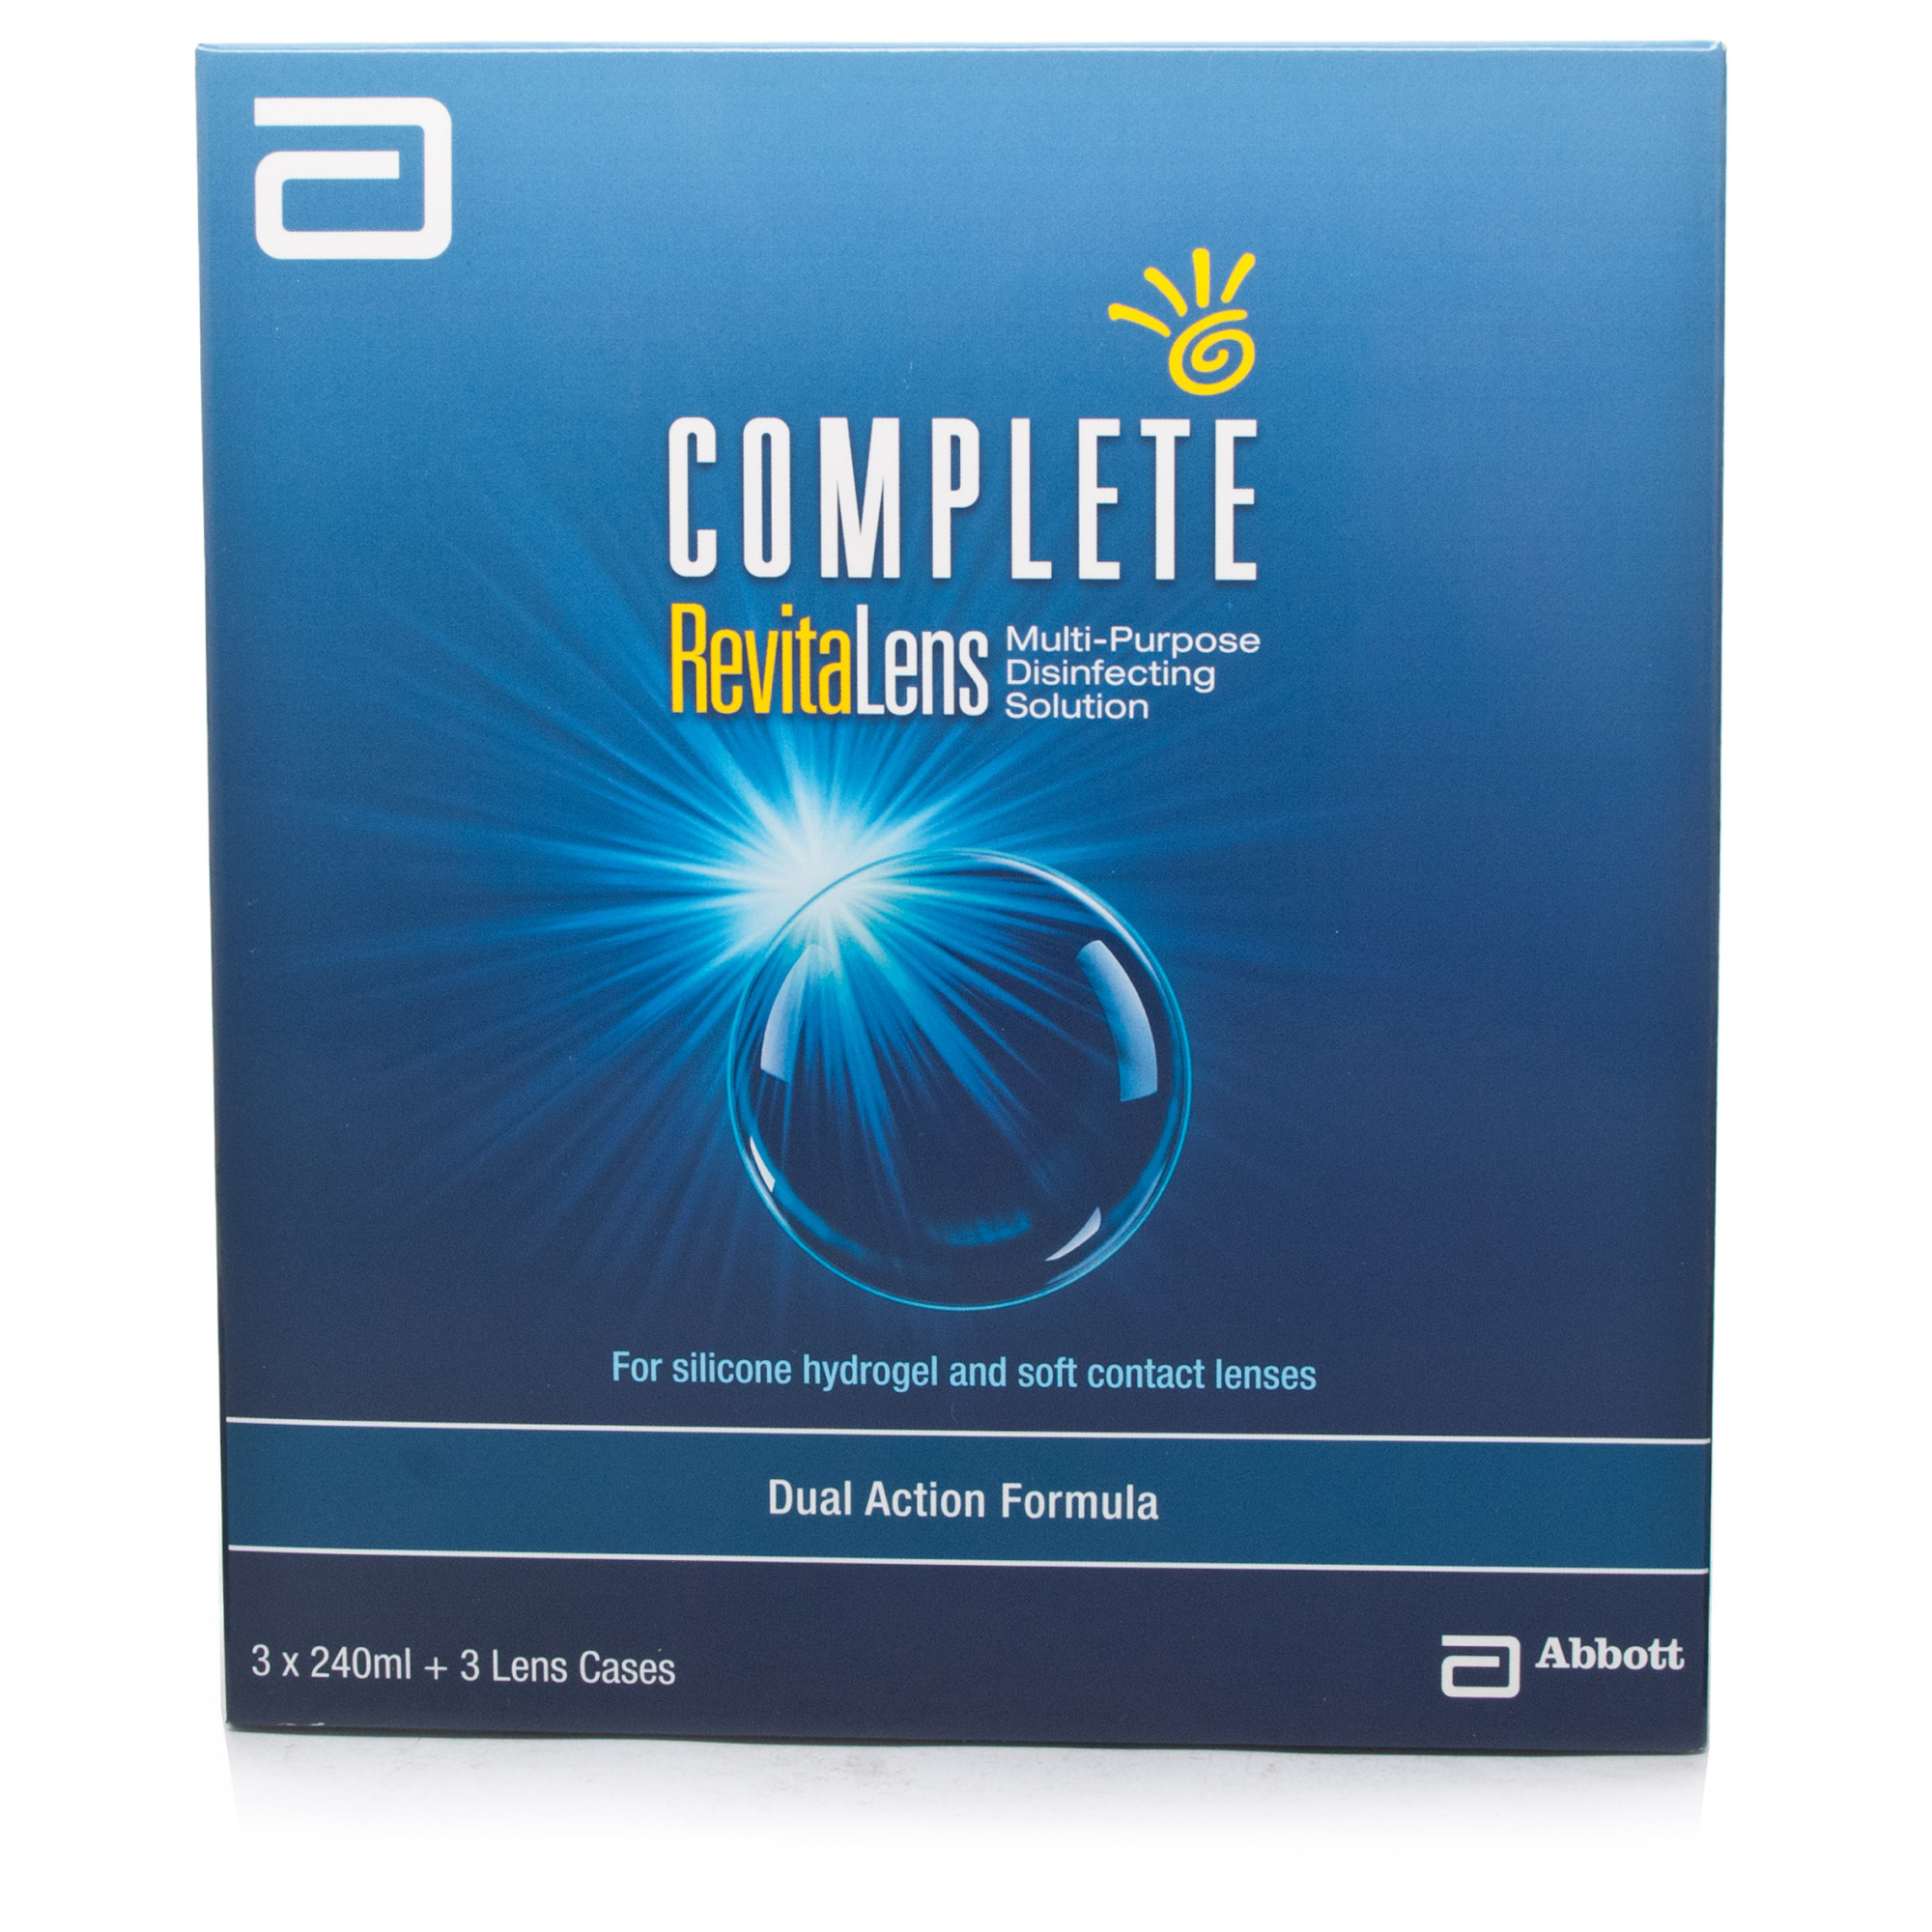 Раствор complete. Abbott Medical Optics. Complete REVITALENS. Аквавью Ревиталенс. Complete solutions